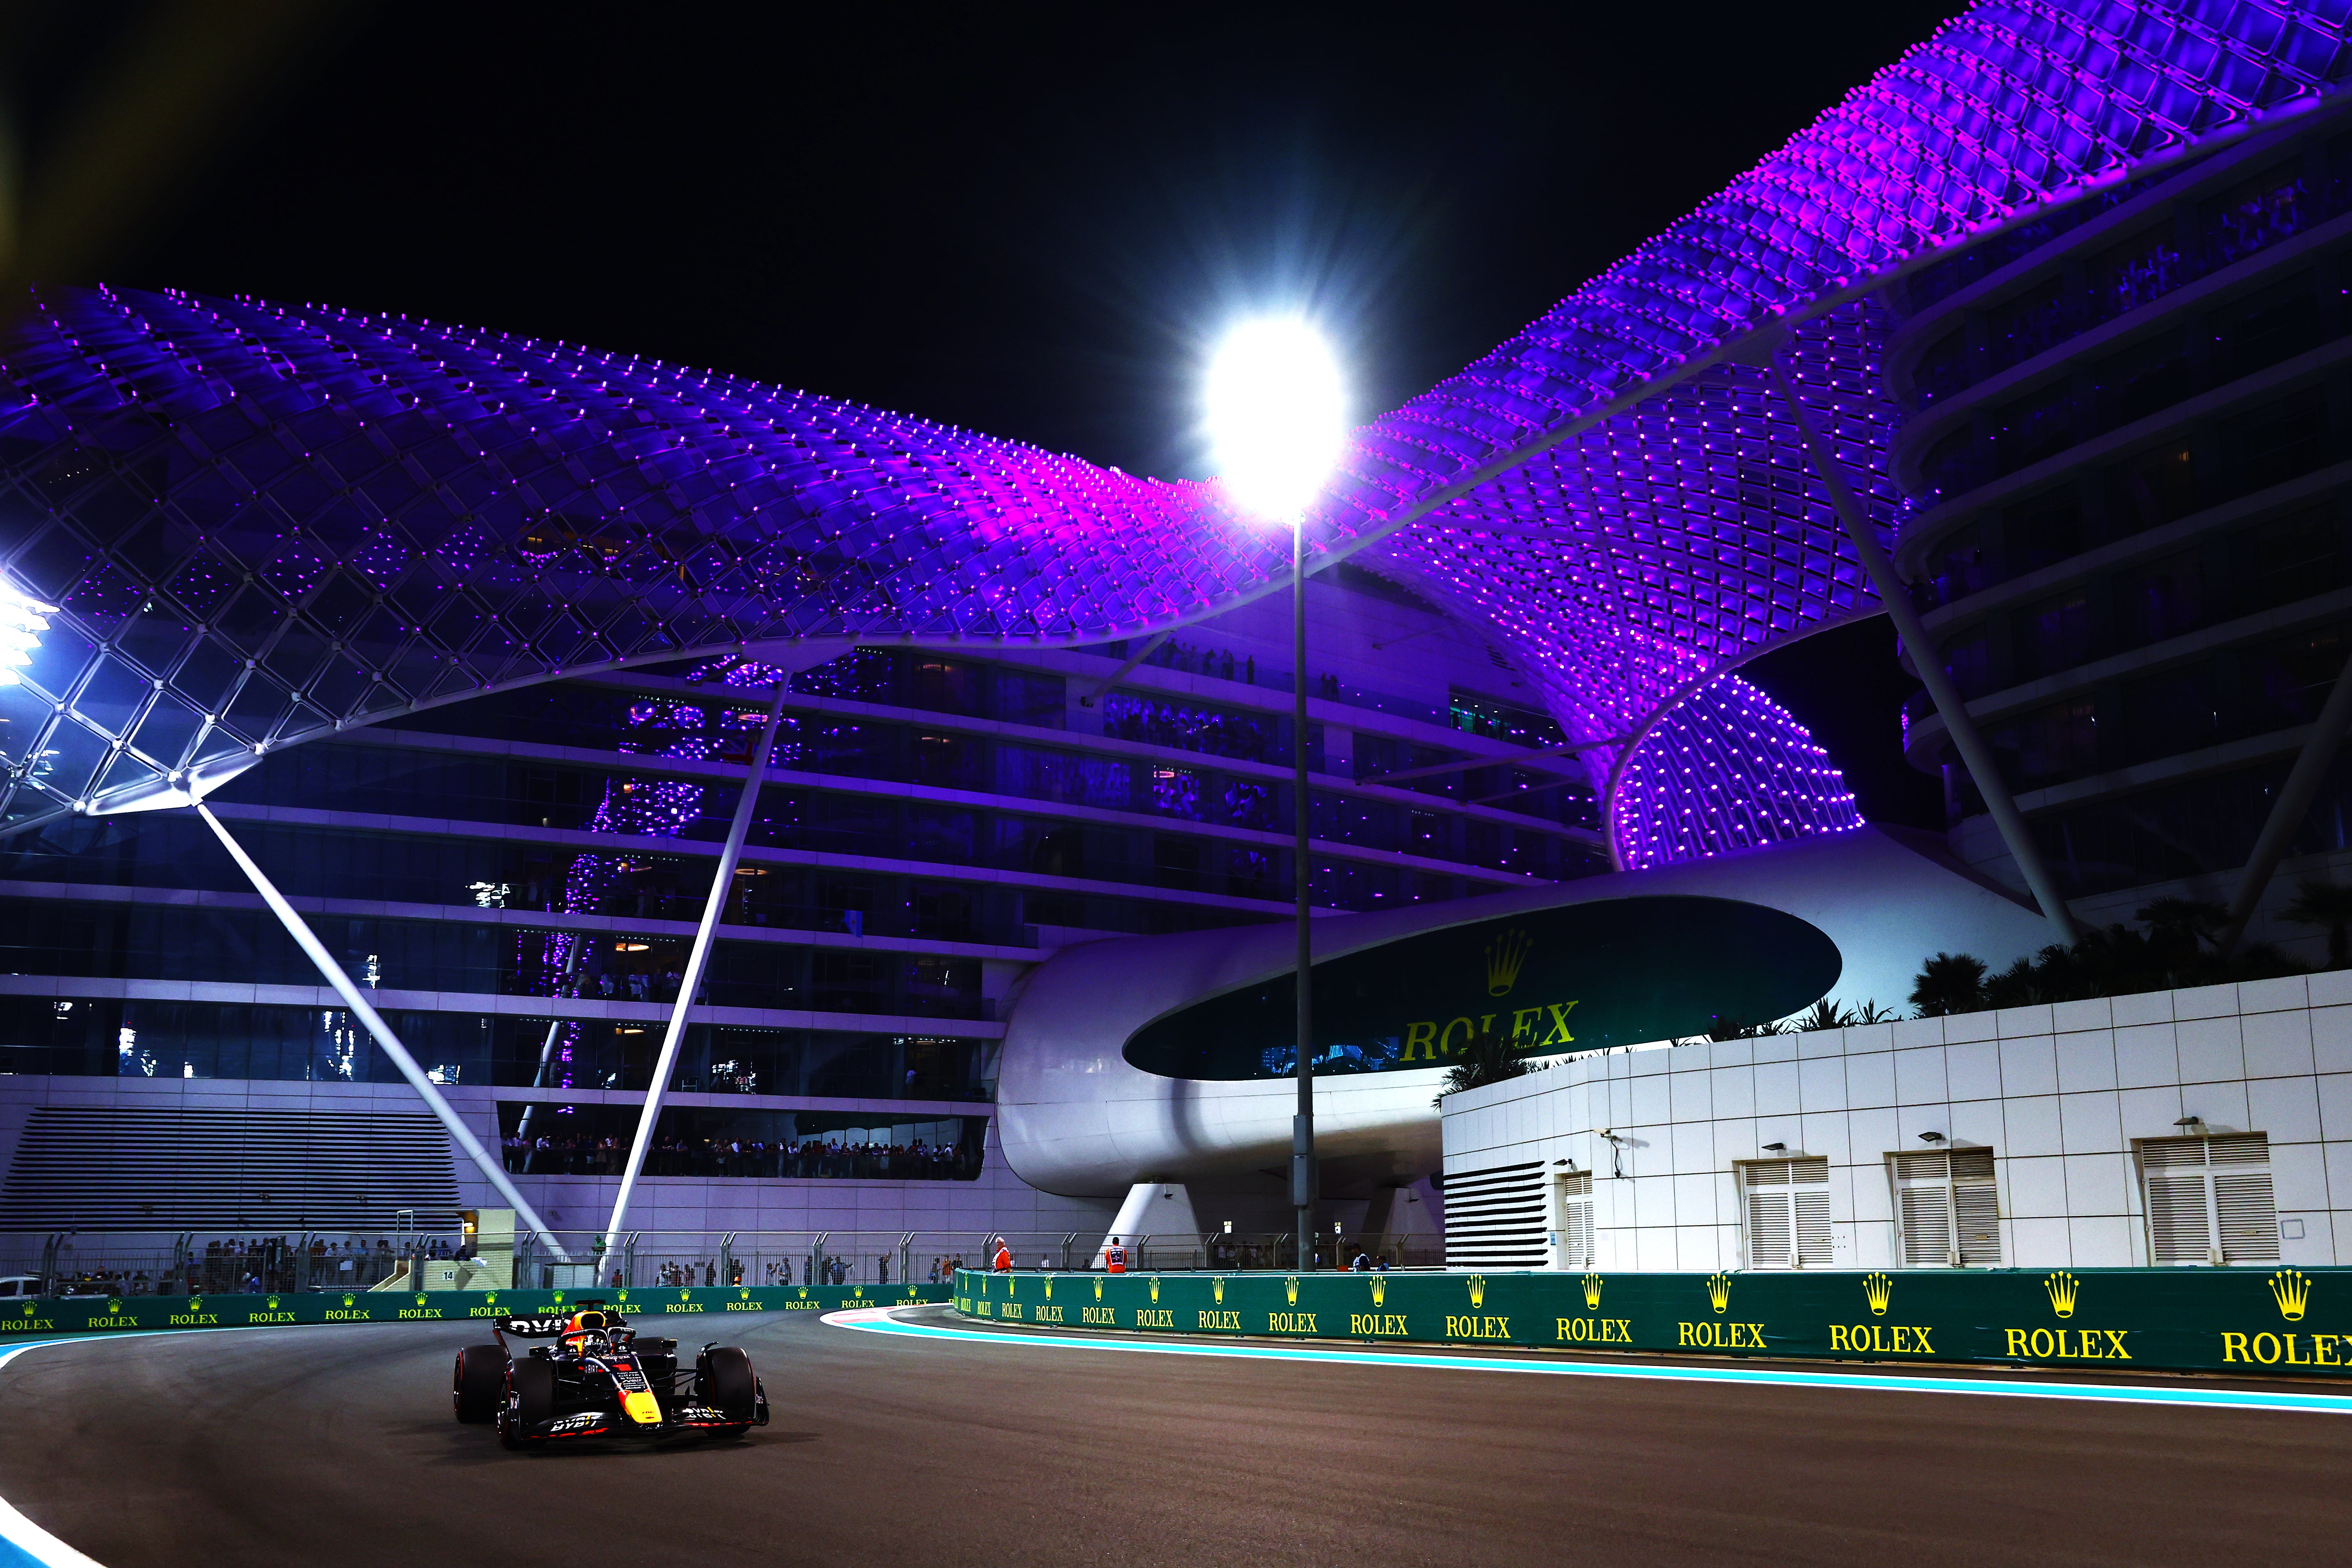 Max Verstappen won the 2022 Abu Dhabi Grand Prix